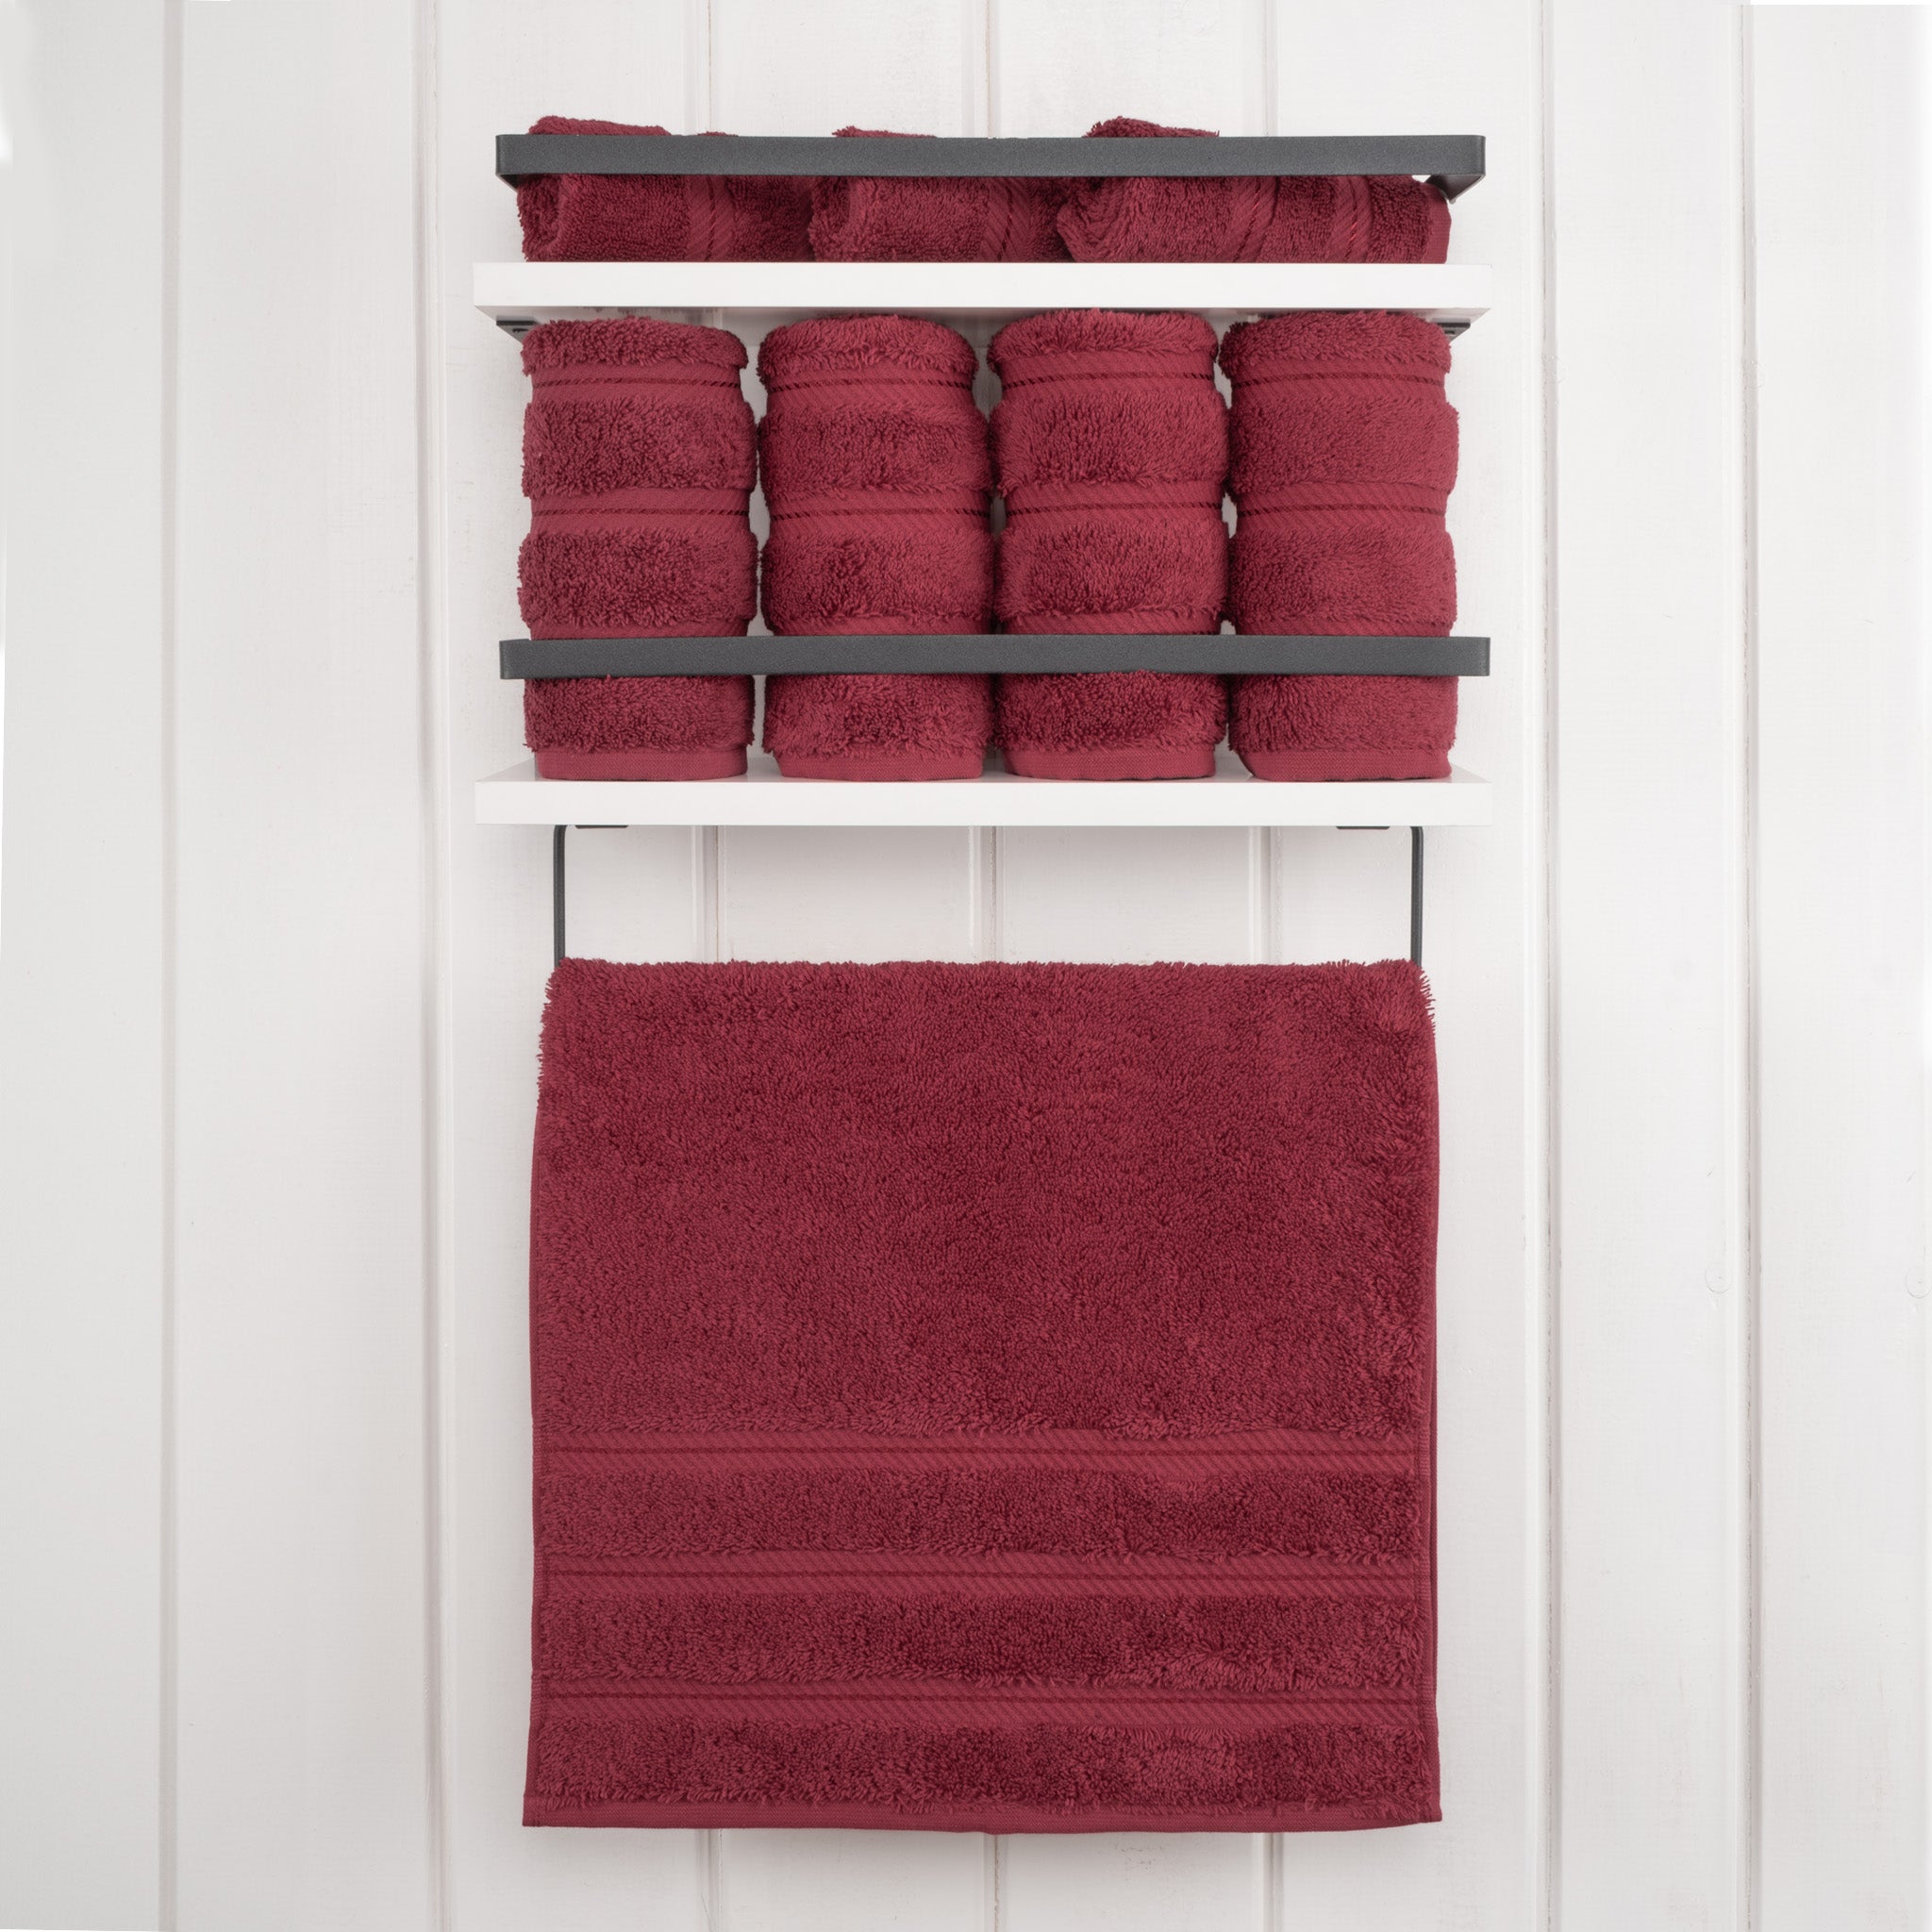  American Soft Linen 100% Turkish Cotton 4 Pack Hand Towel Set  bordeaux-red-2